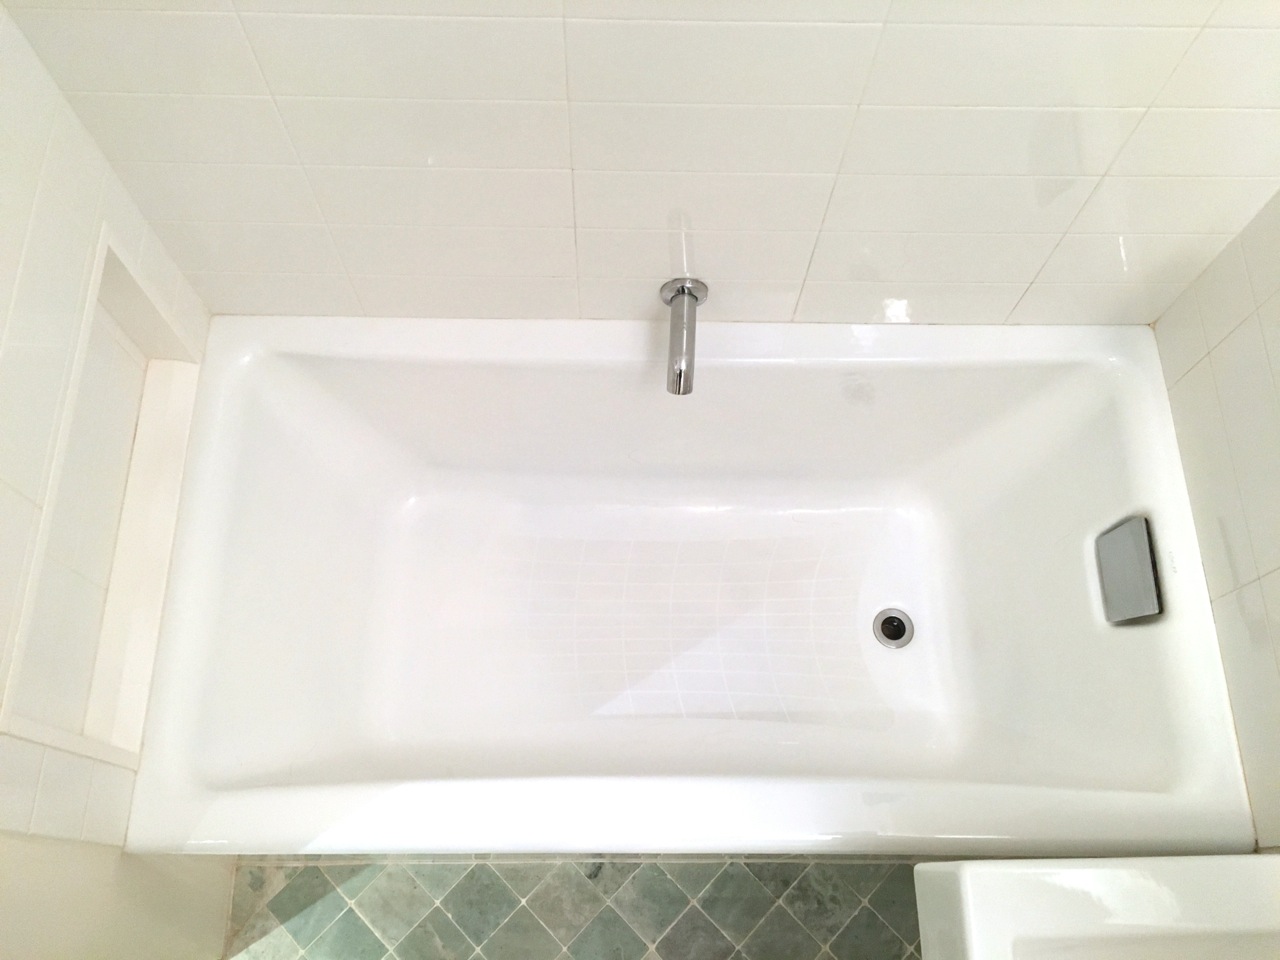 How To Make A 5 Foot Alcove Tub Feel, Bathtubs Under 5 Feet Long